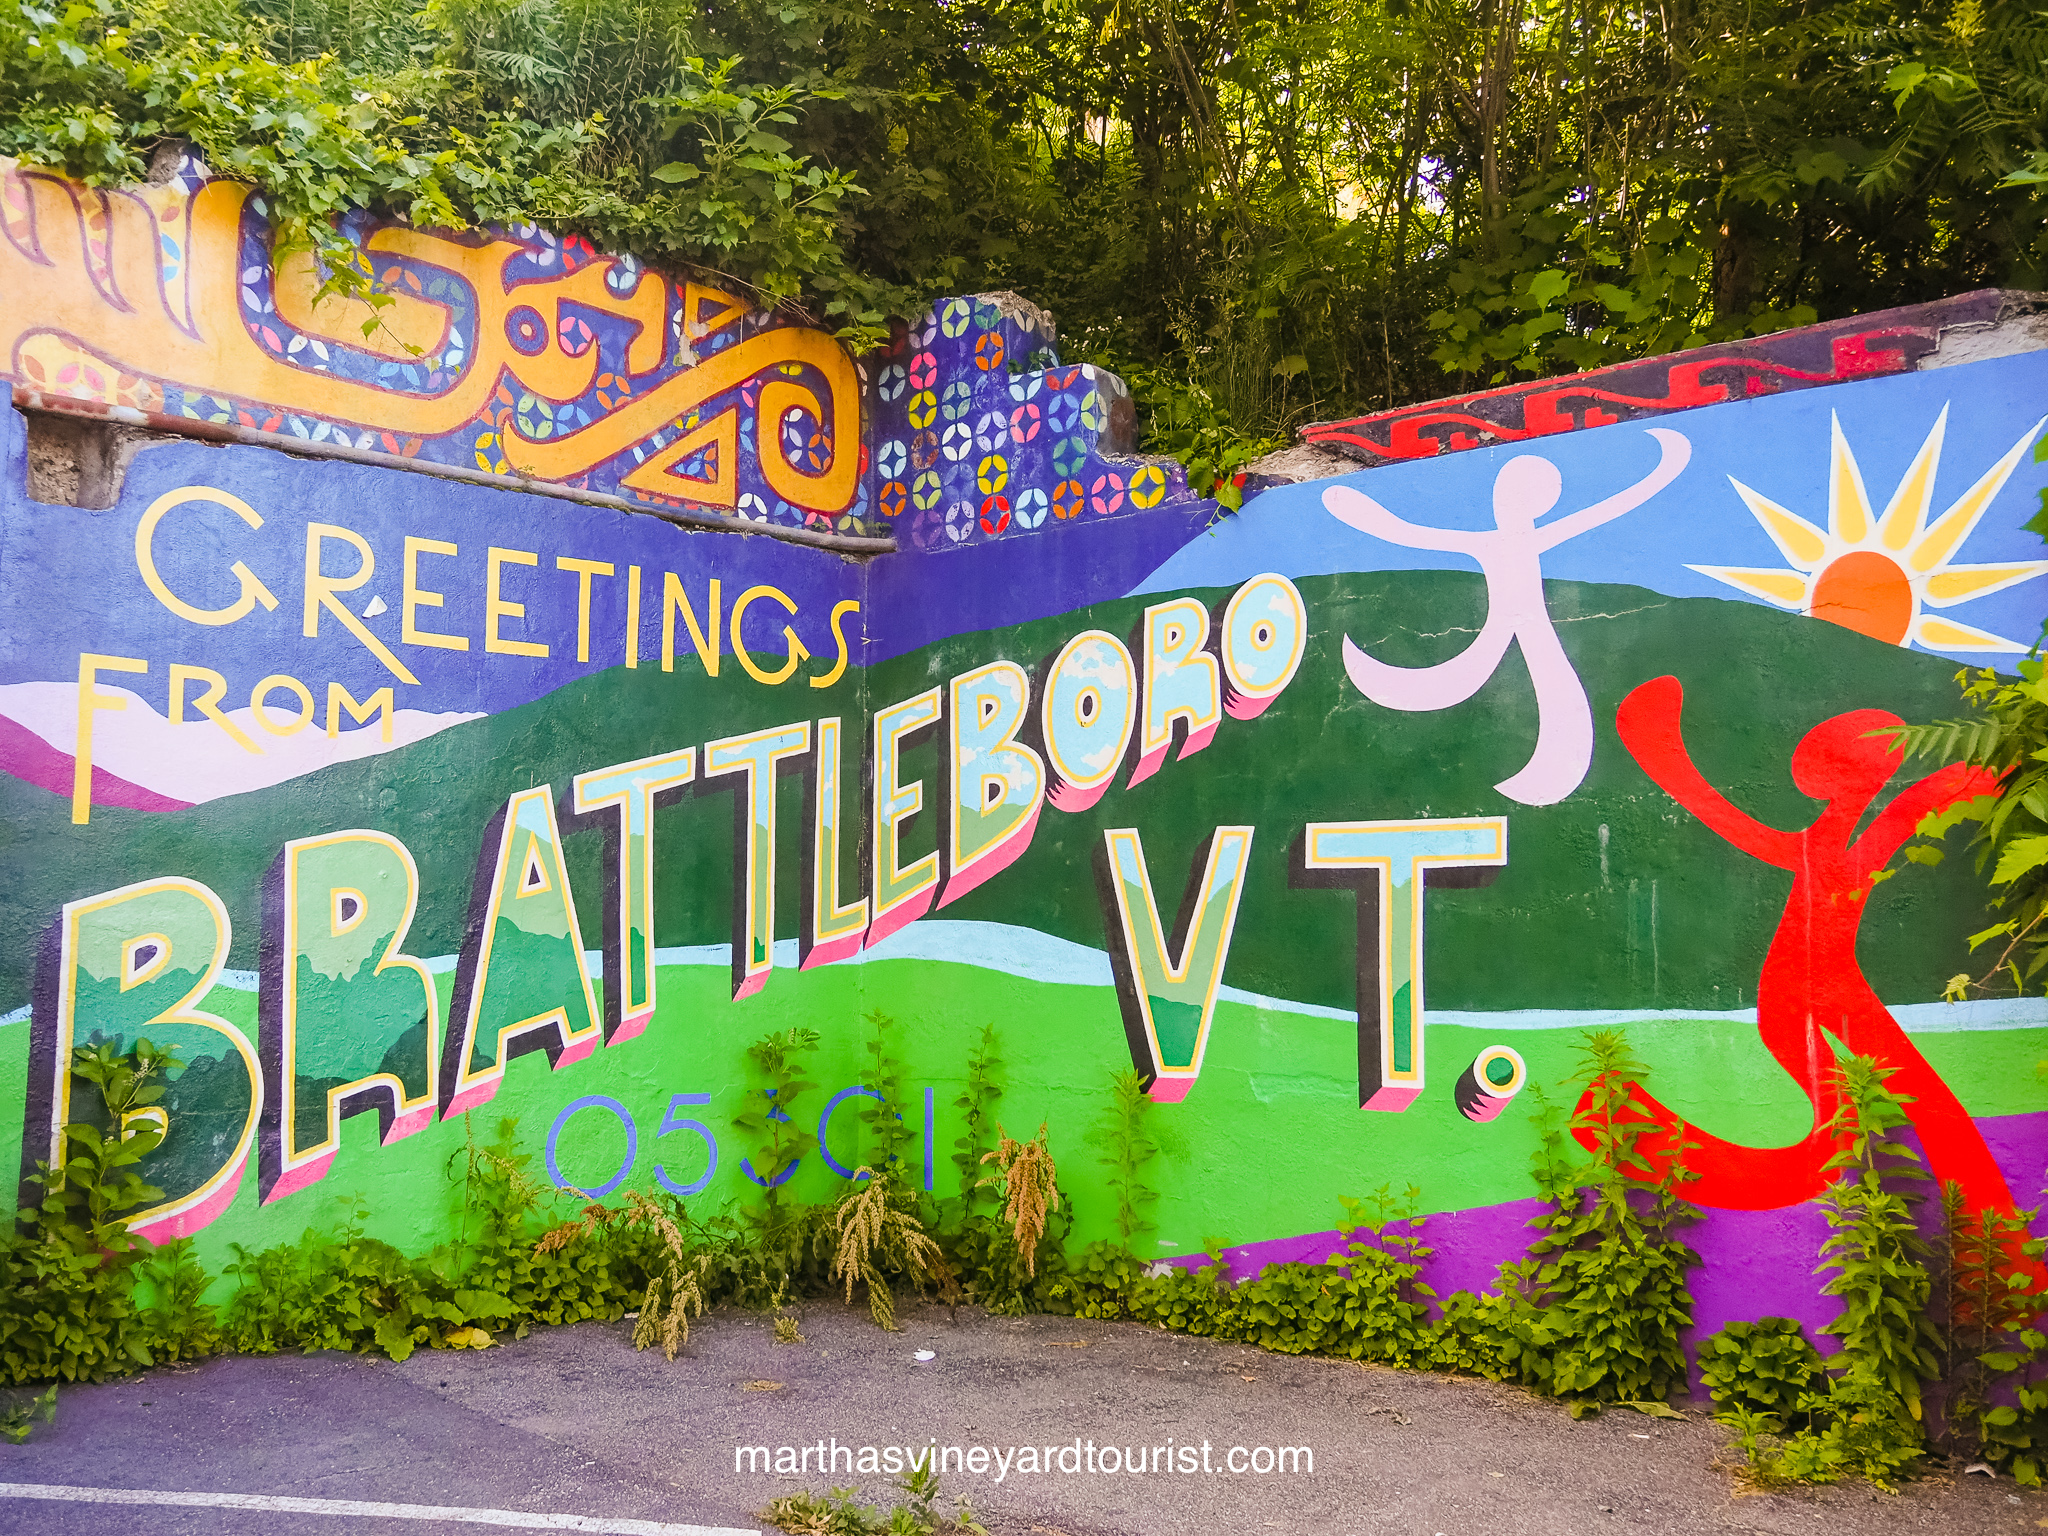 street art that says Greetings from Brattleboro Vermont